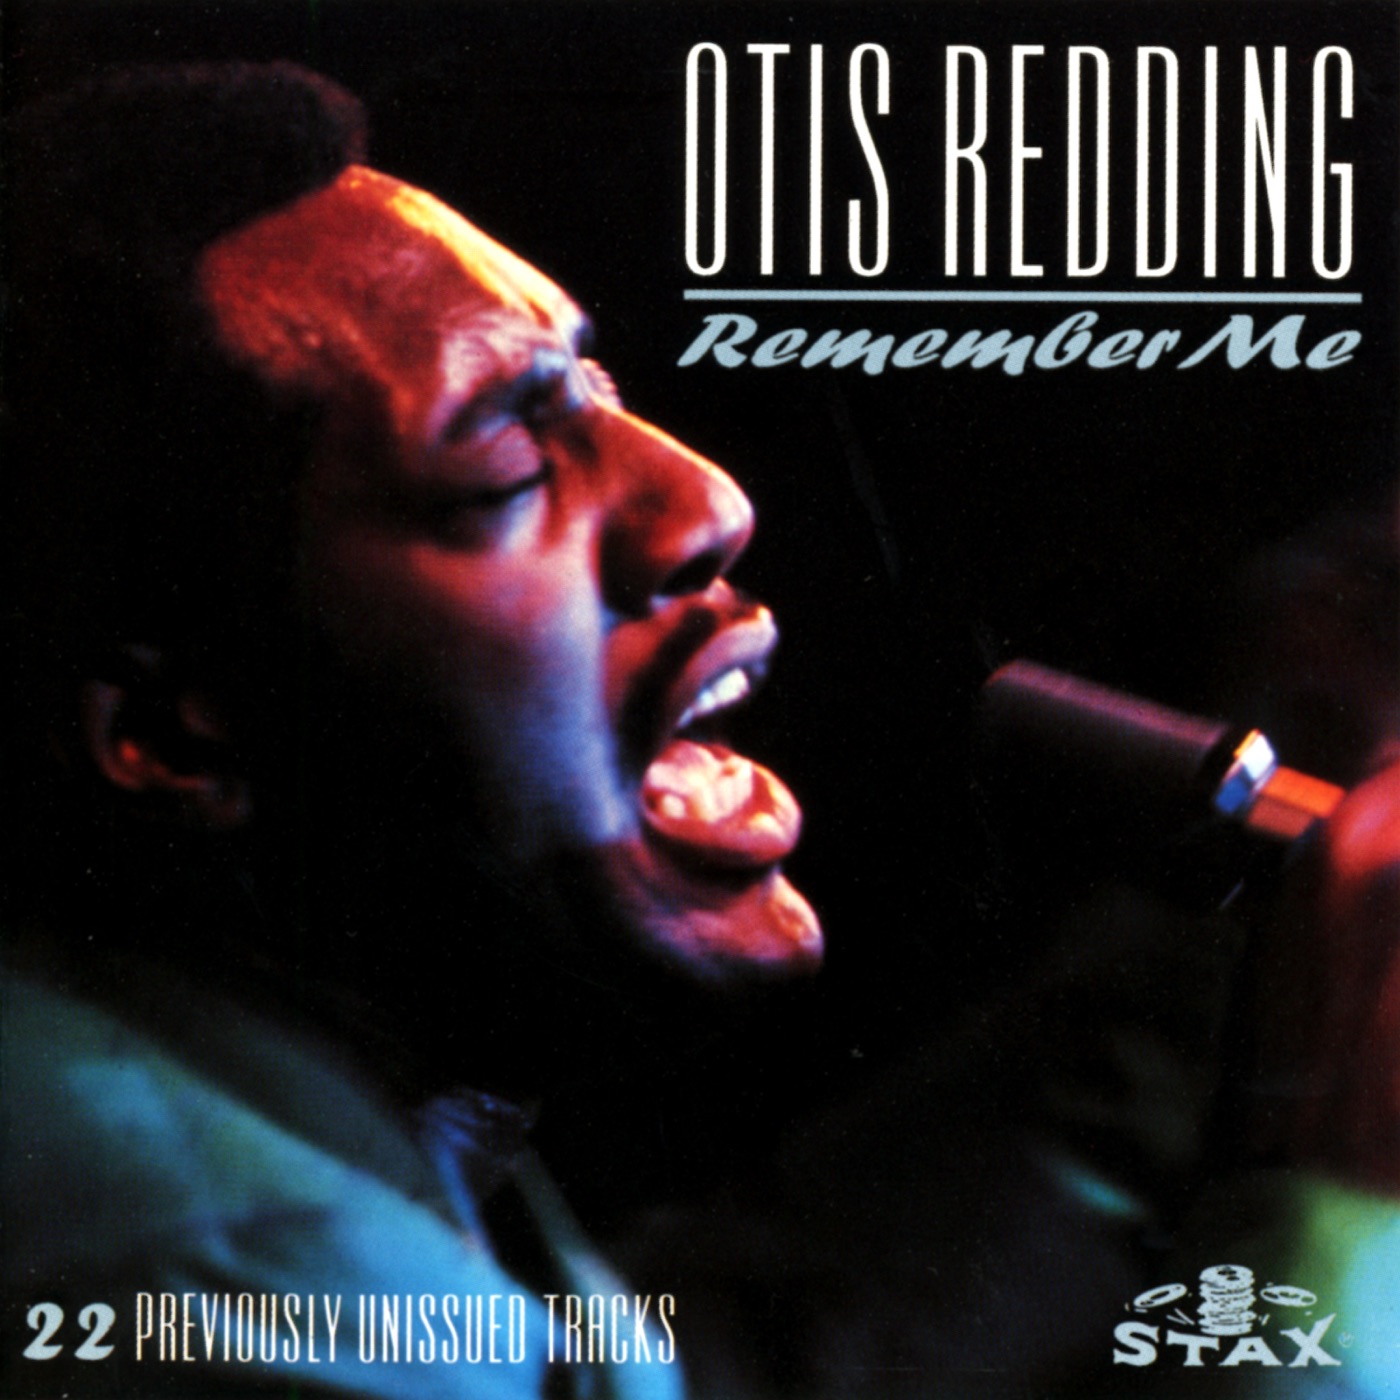 Remember Me by Otis Redding